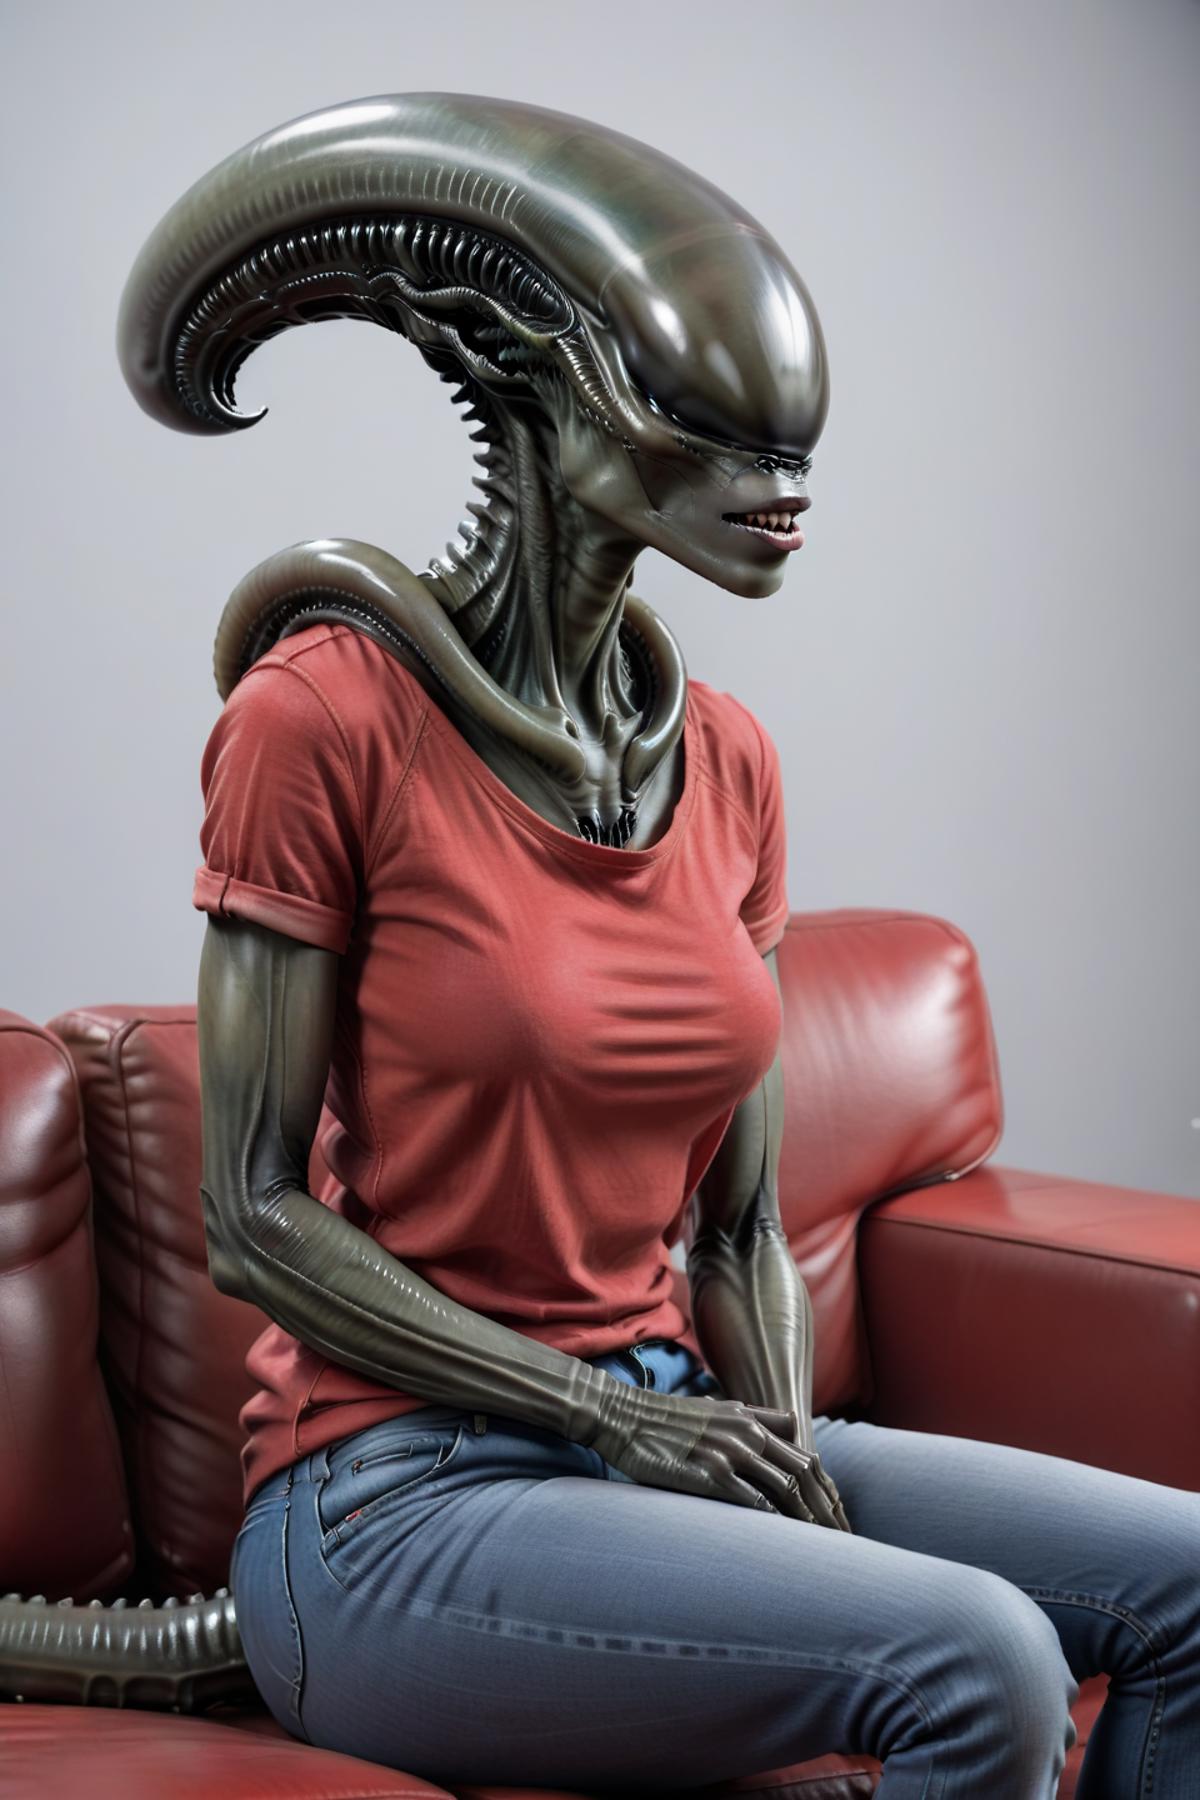 Female Xenomorph - Alien Woman image by Catalorian